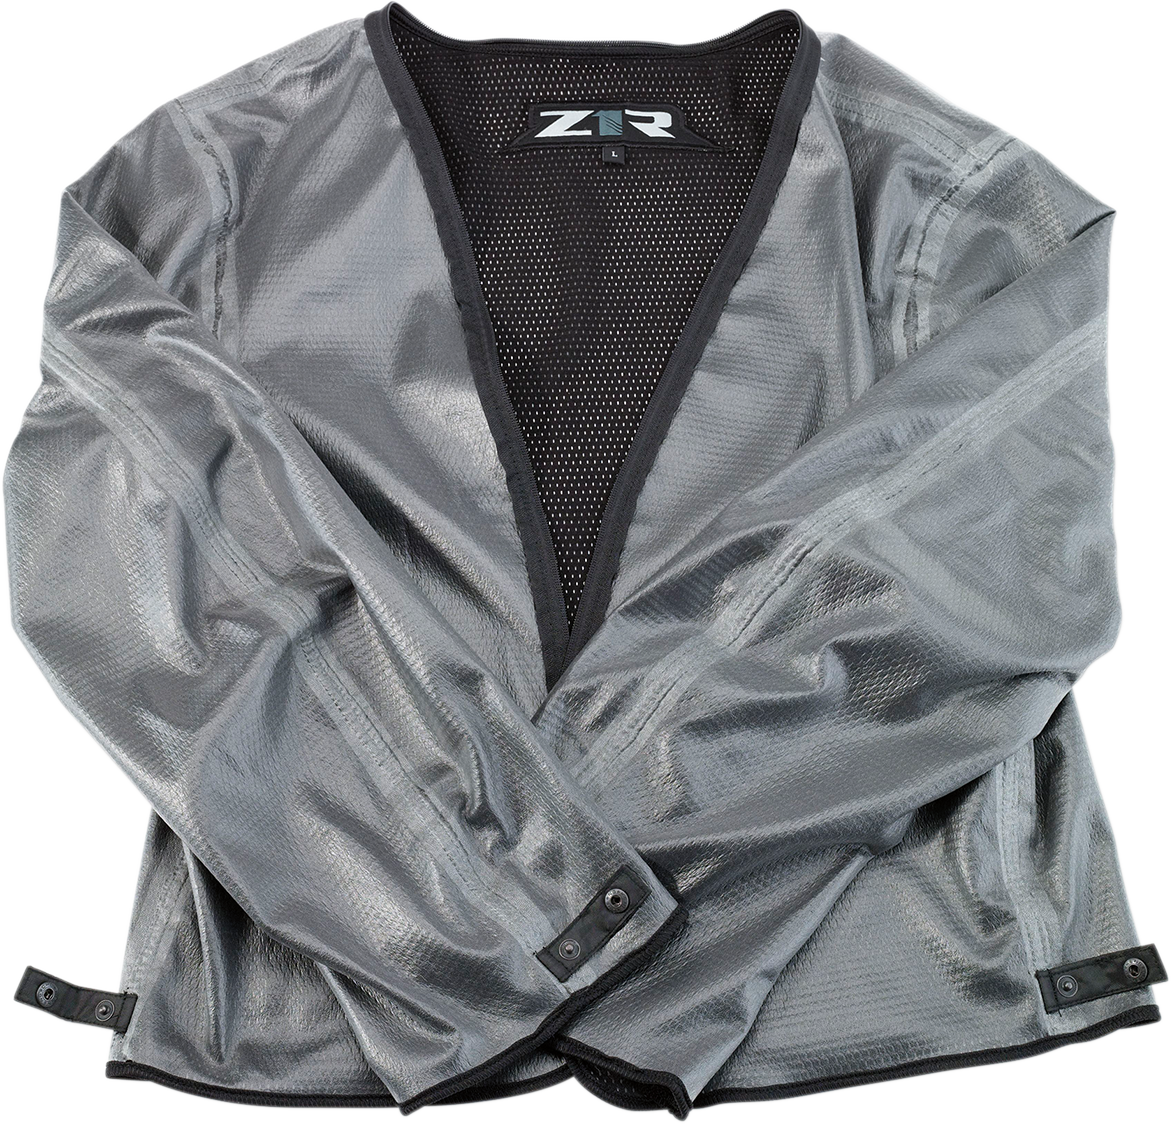 Z1R Gust Mesh Waterproof Jacket - Black - Small 2820-4941